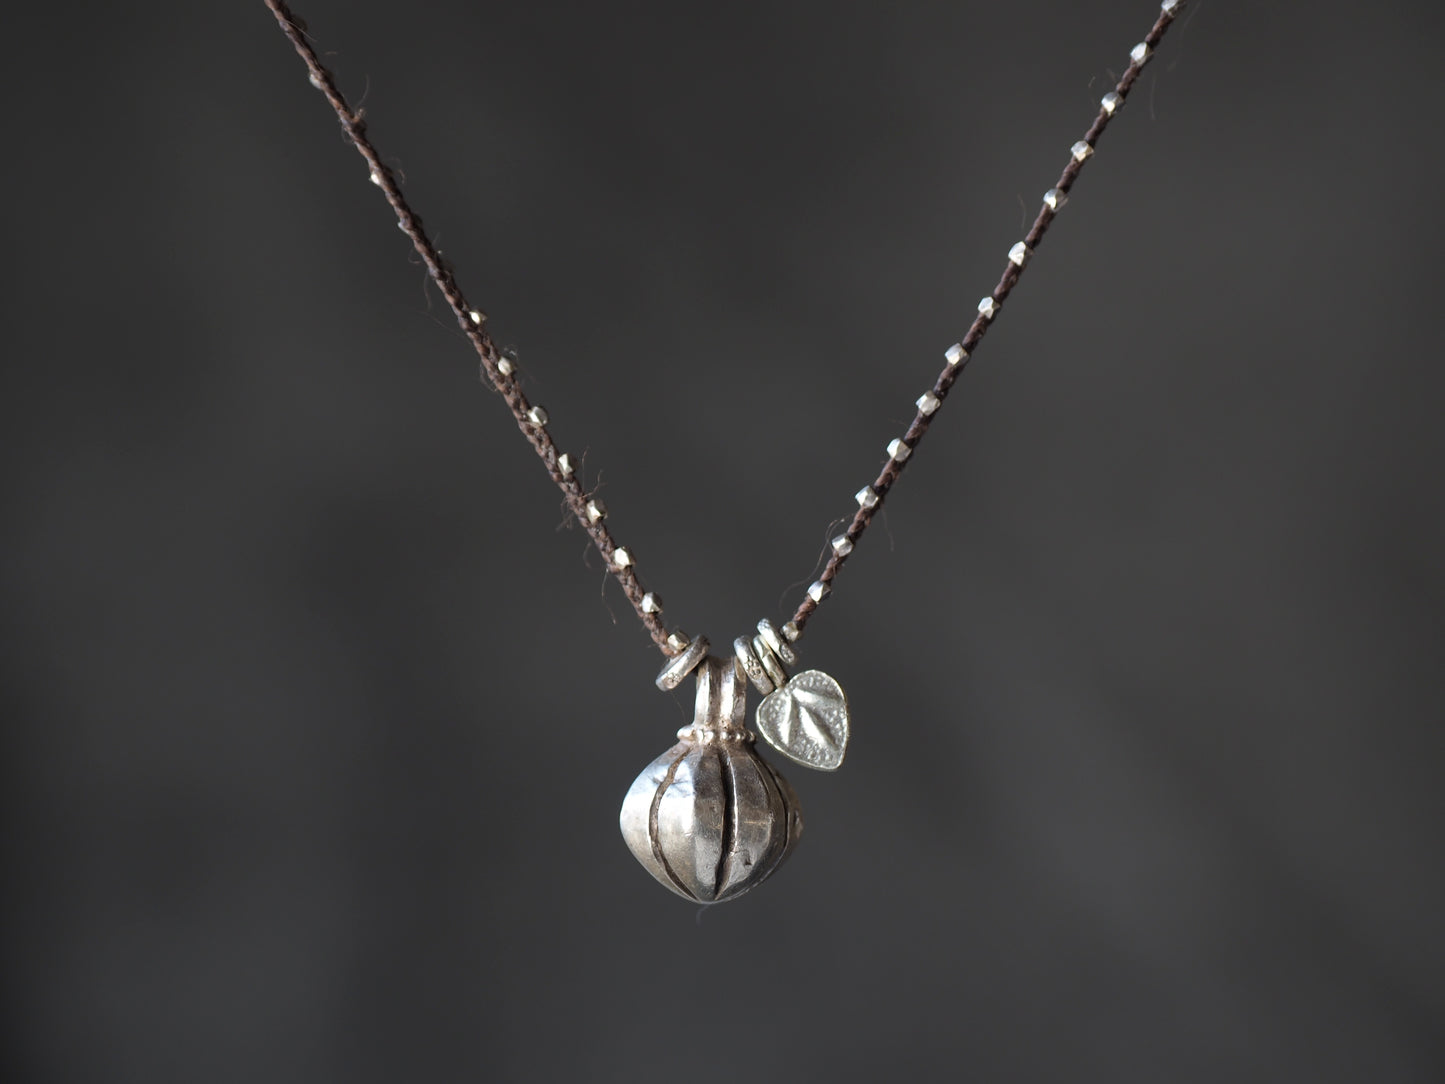 -OLD silver- braid pendant